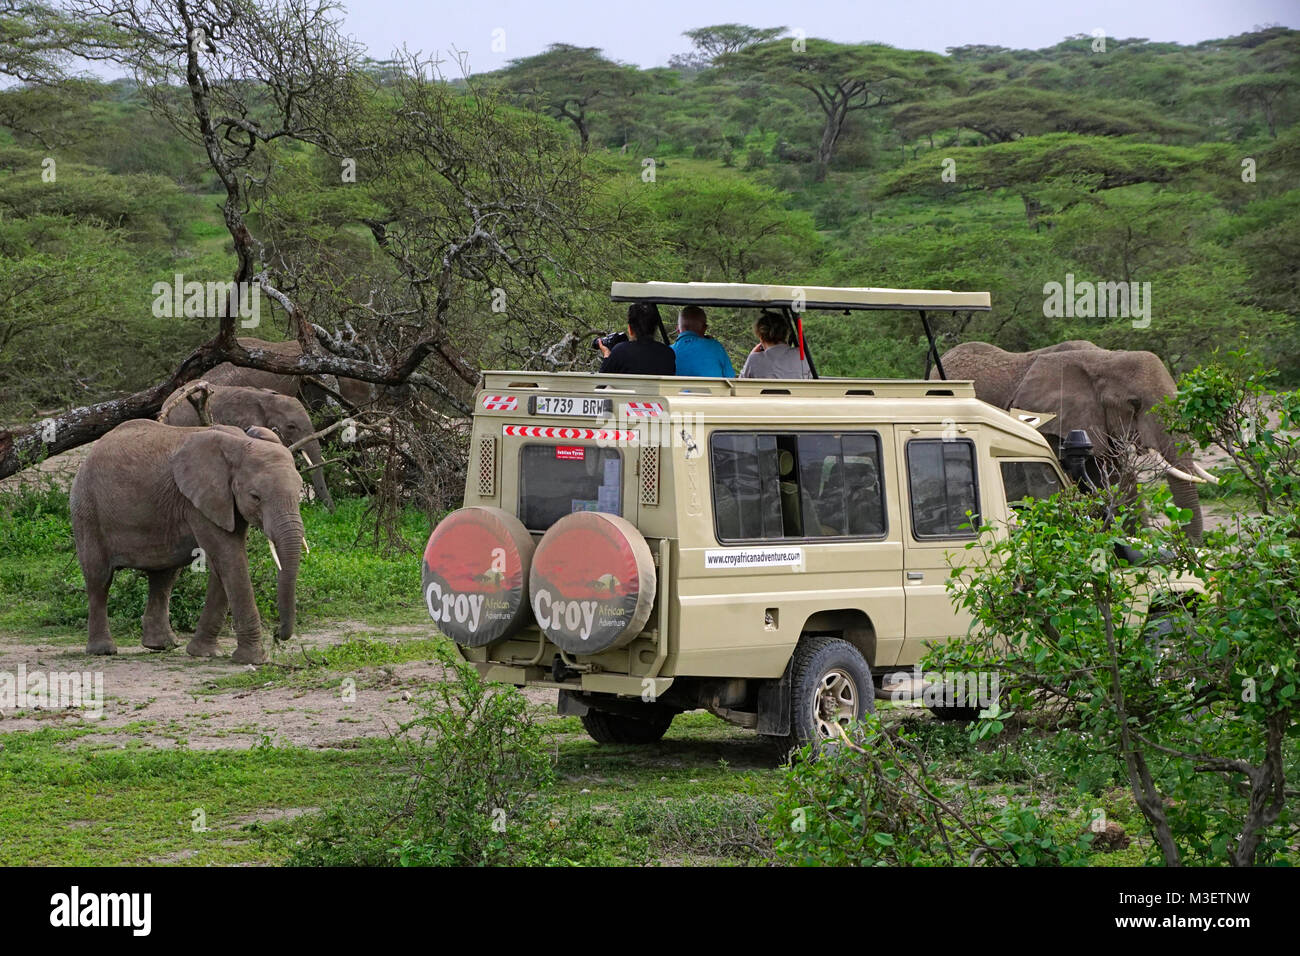 Tourists photographing elephants in Serengeti National Park, Tanzania. Stock Photo